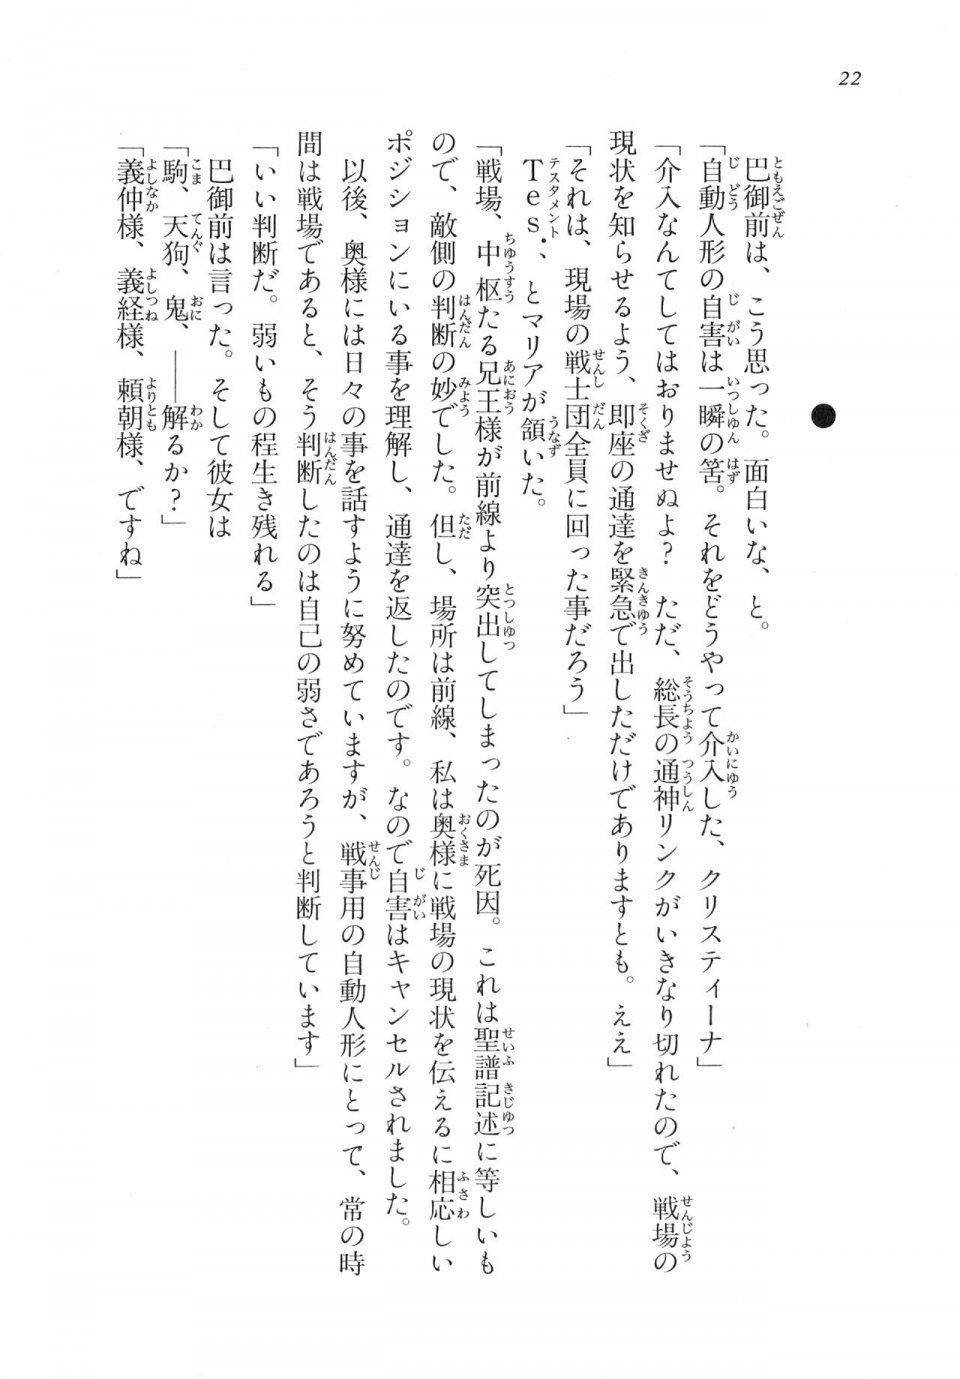 Kyoukai Senjou no Horizon LN Vol 18(7C) Part 1 - Photo #22